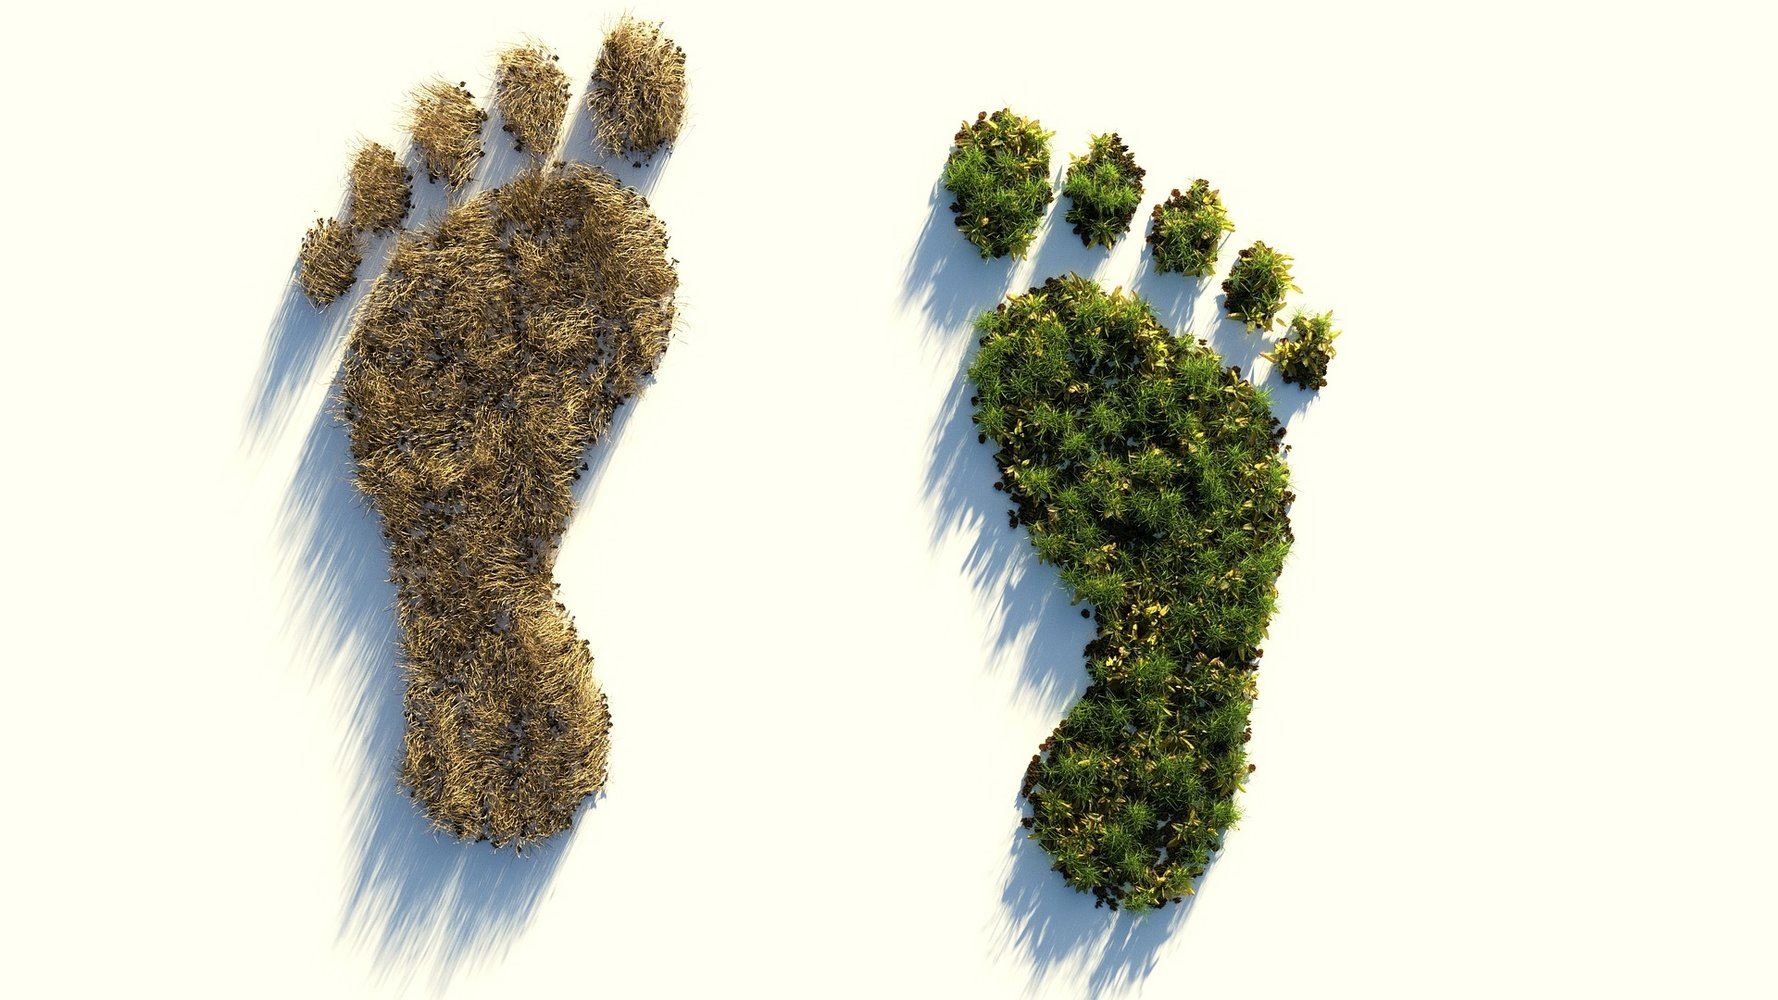 ecological-footprint-4123696_1920-jpg__1920x1000_q85_subsampling-2